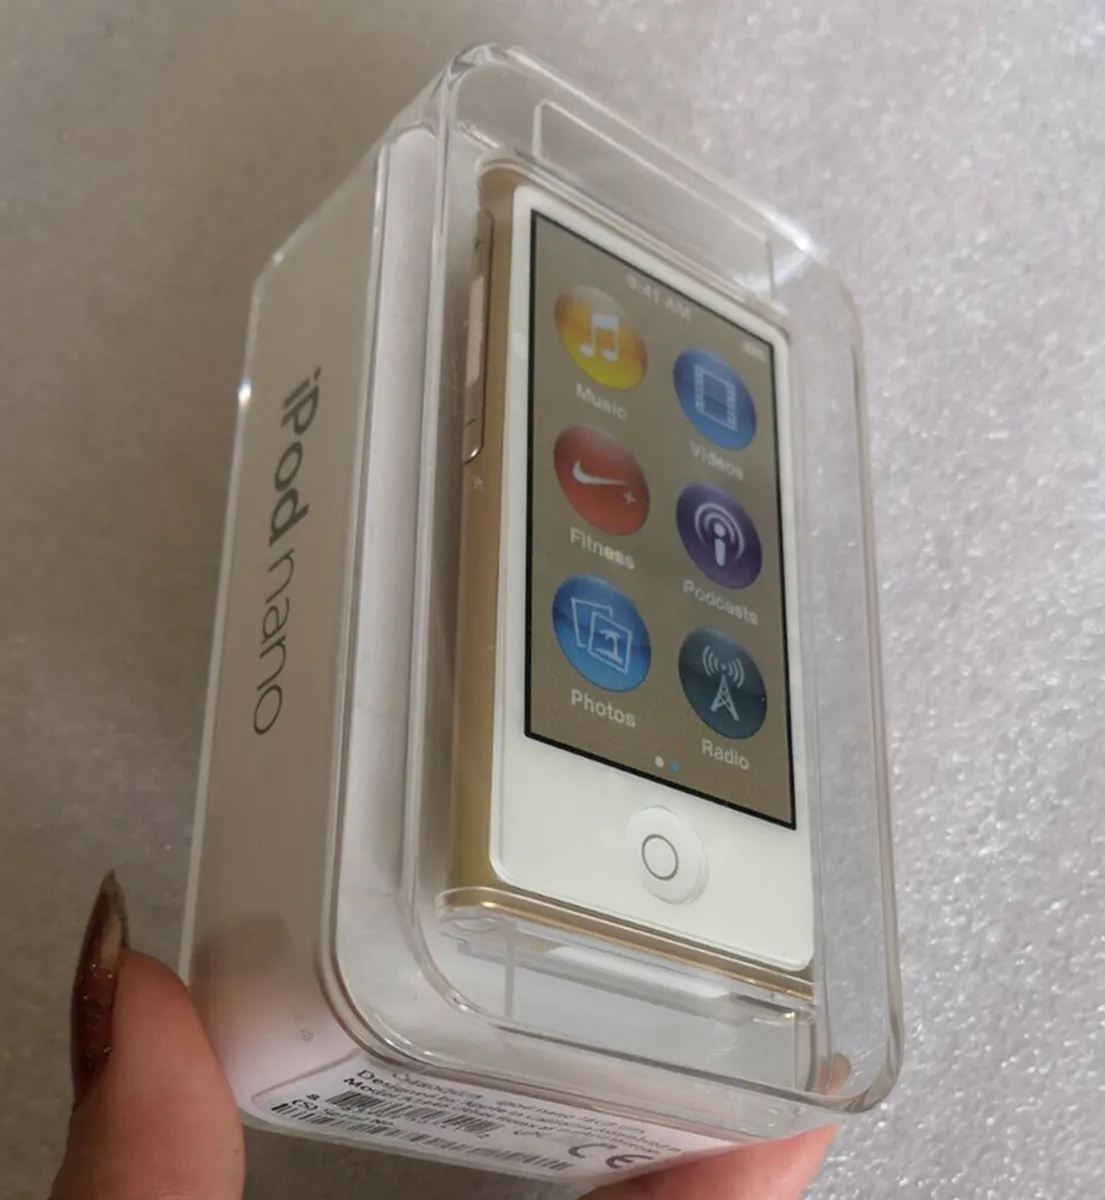 NEW,Apple iPod nano 7th generation (16gb) sealed retail box--Gold ,WARRANTY